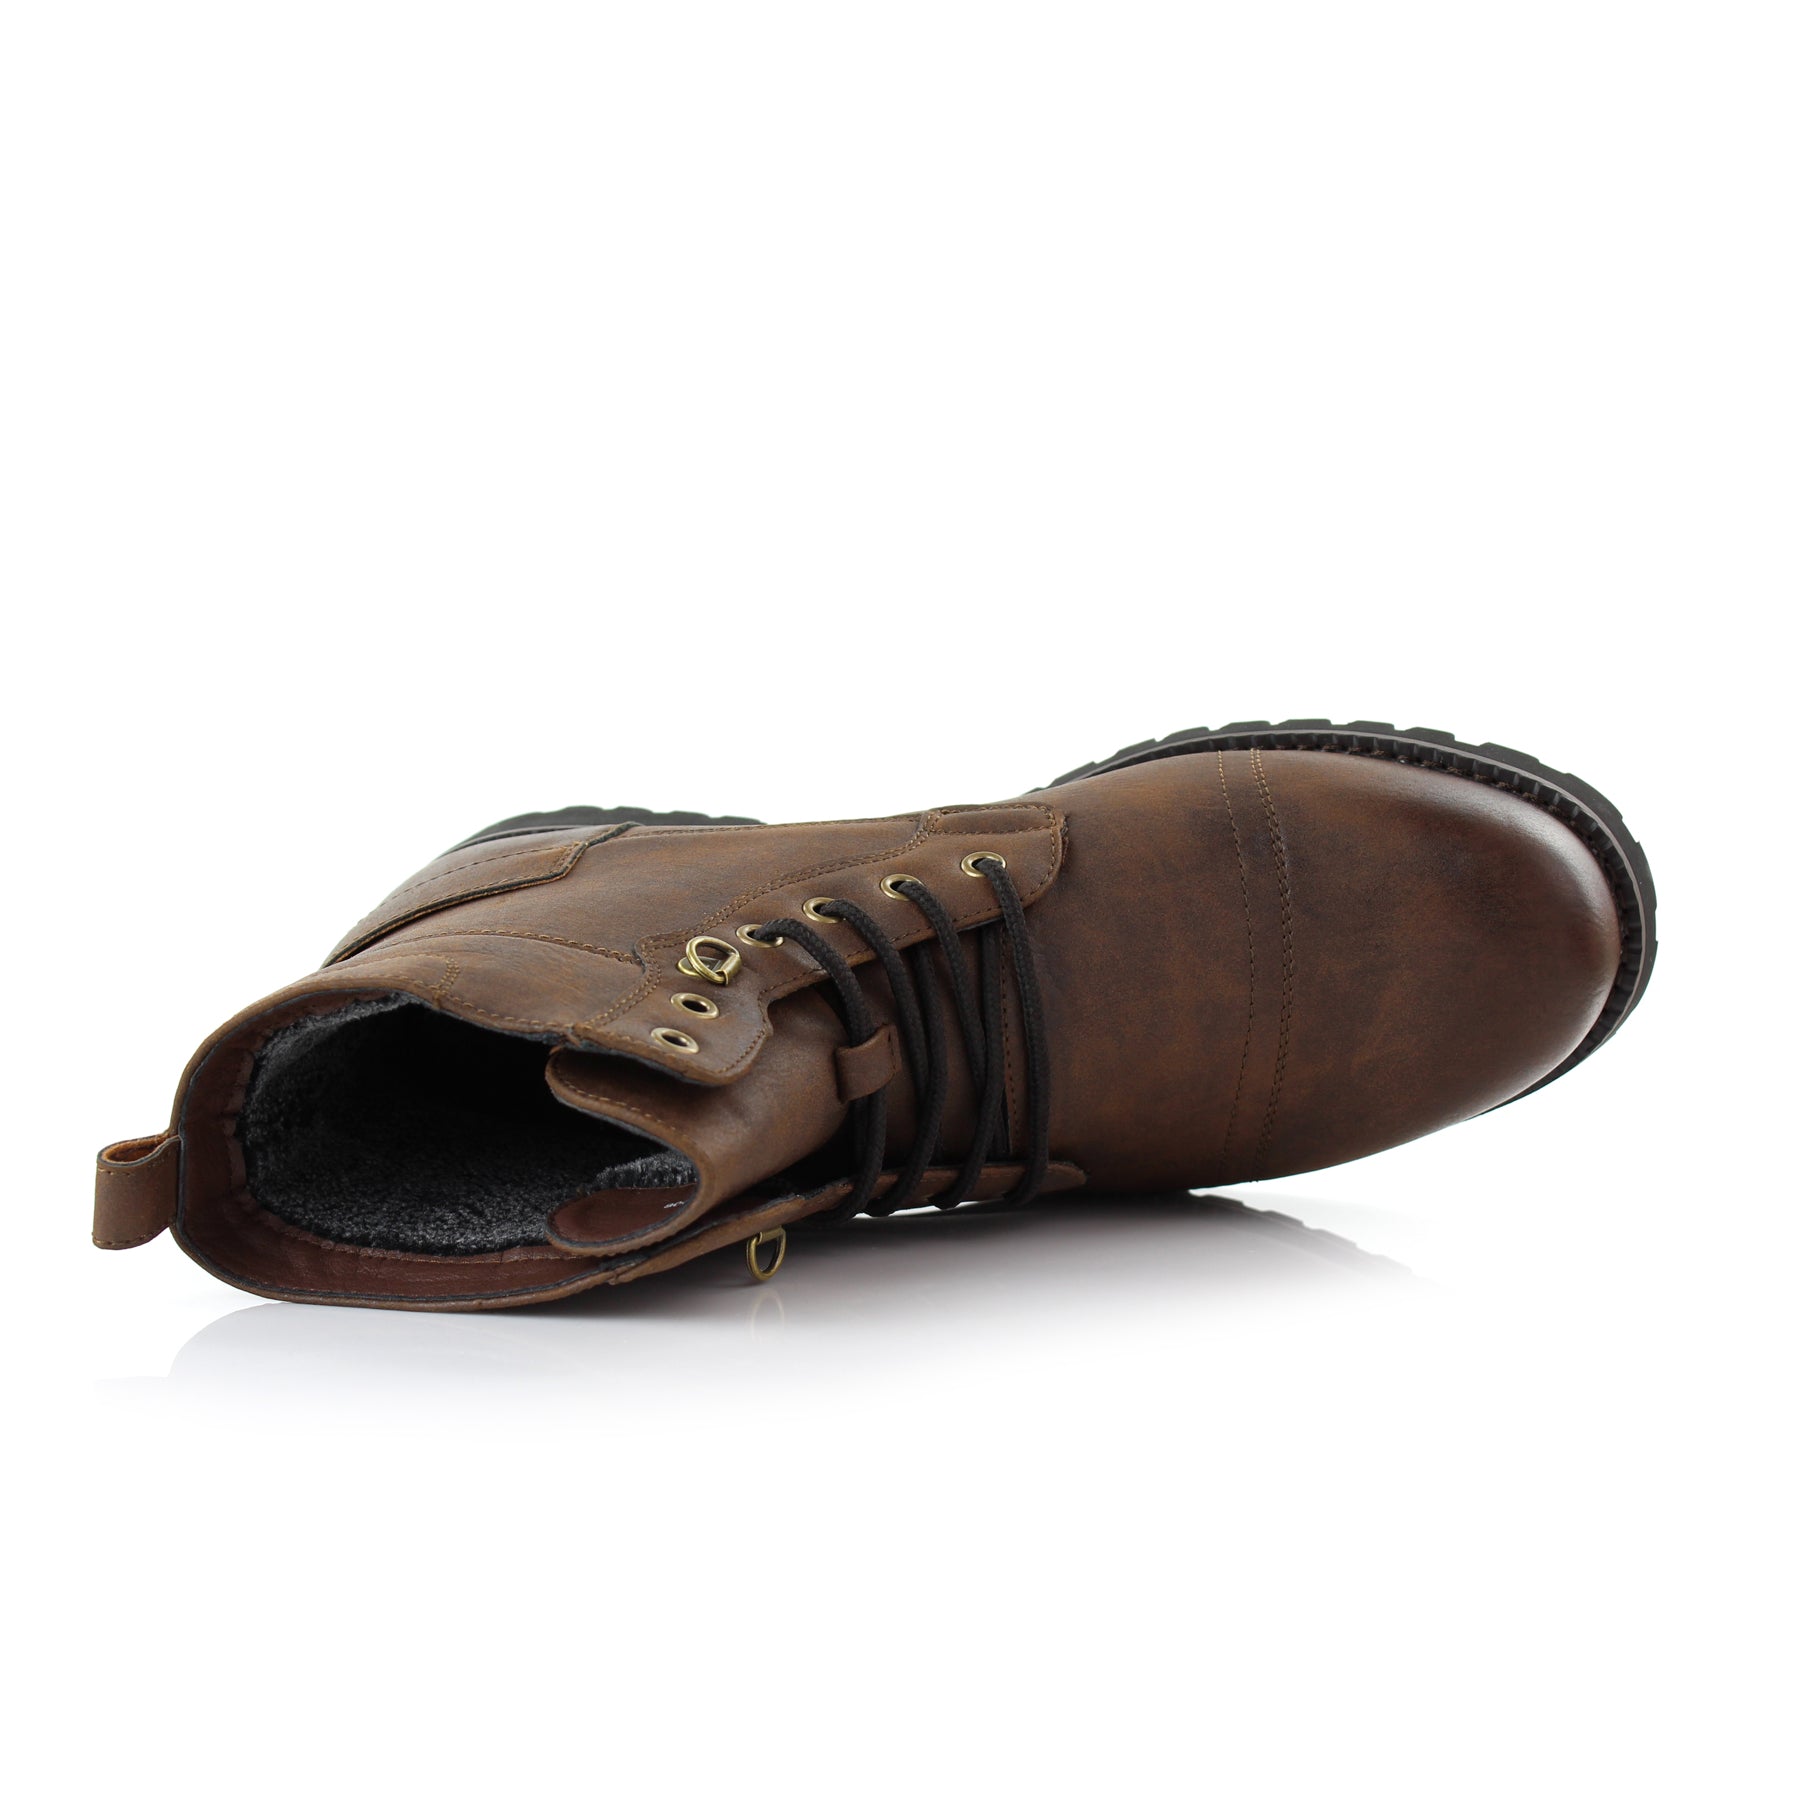 Rugged Inner Fur Boots | Fabian by Polar Fox | Conal Footwear | Top-Down Angle View